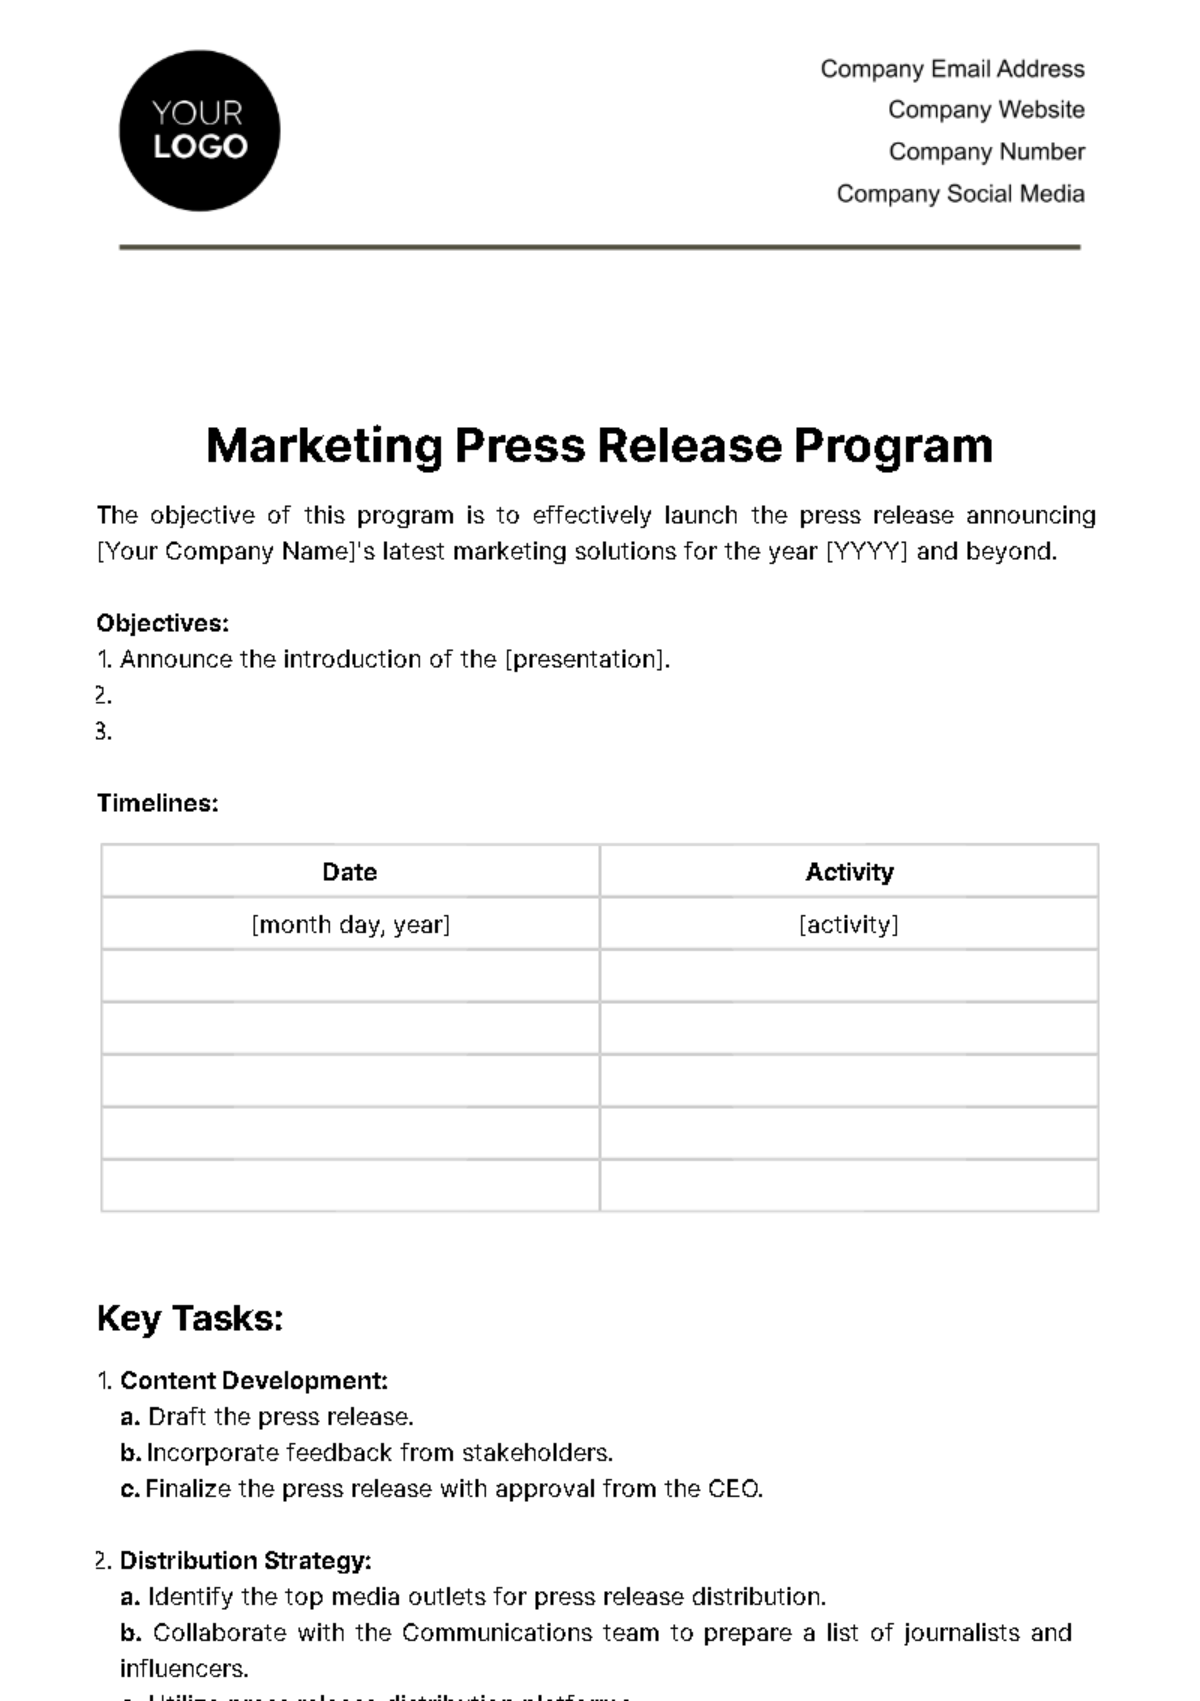 Free Marketing Press Release Program Template